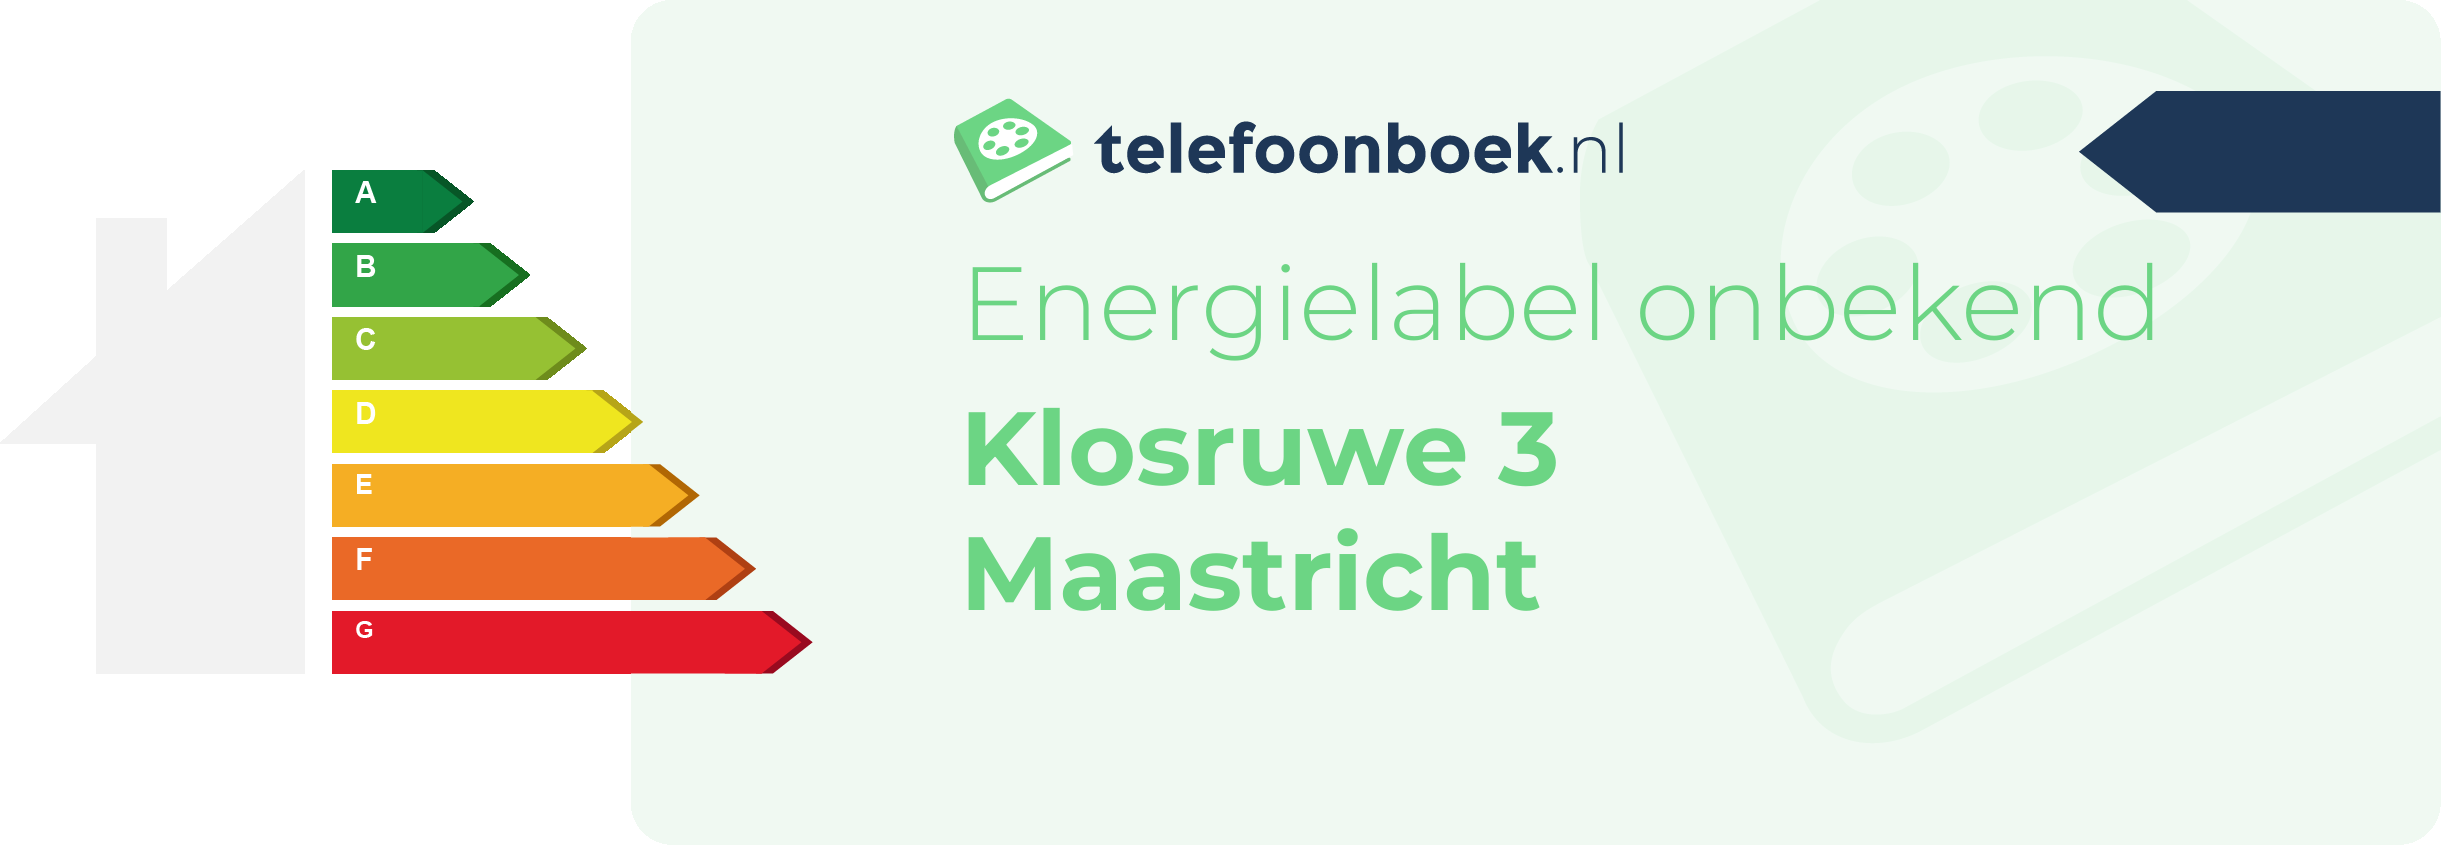 Energielabel Klosruwe 3 Maastricht